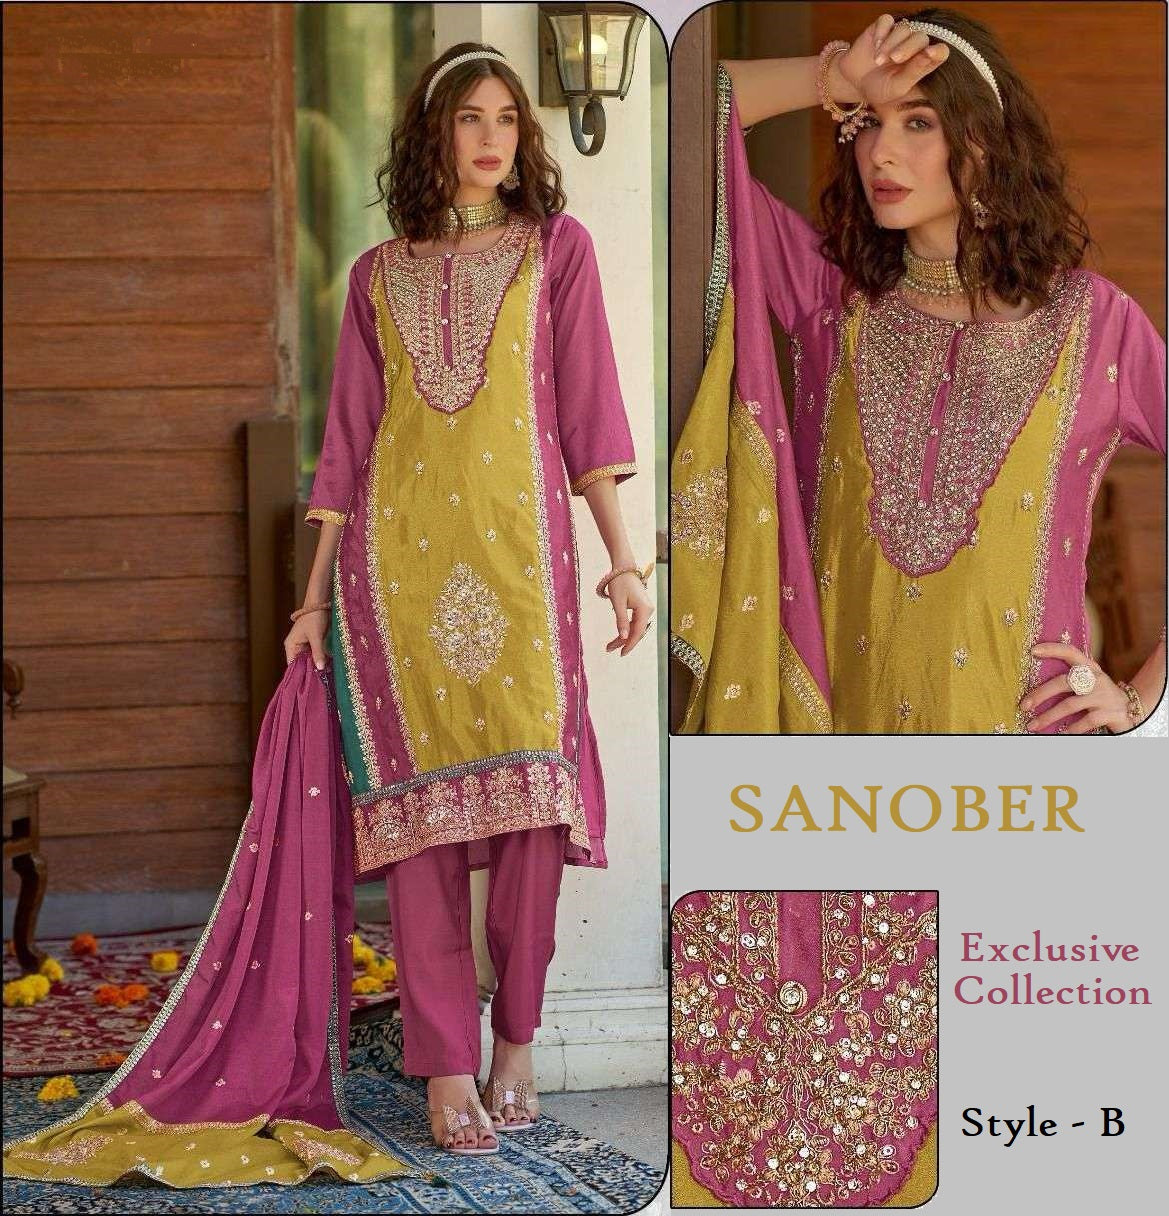 Sanober Pakistani Designer Eid Collection Wedding & Party Wear Suit